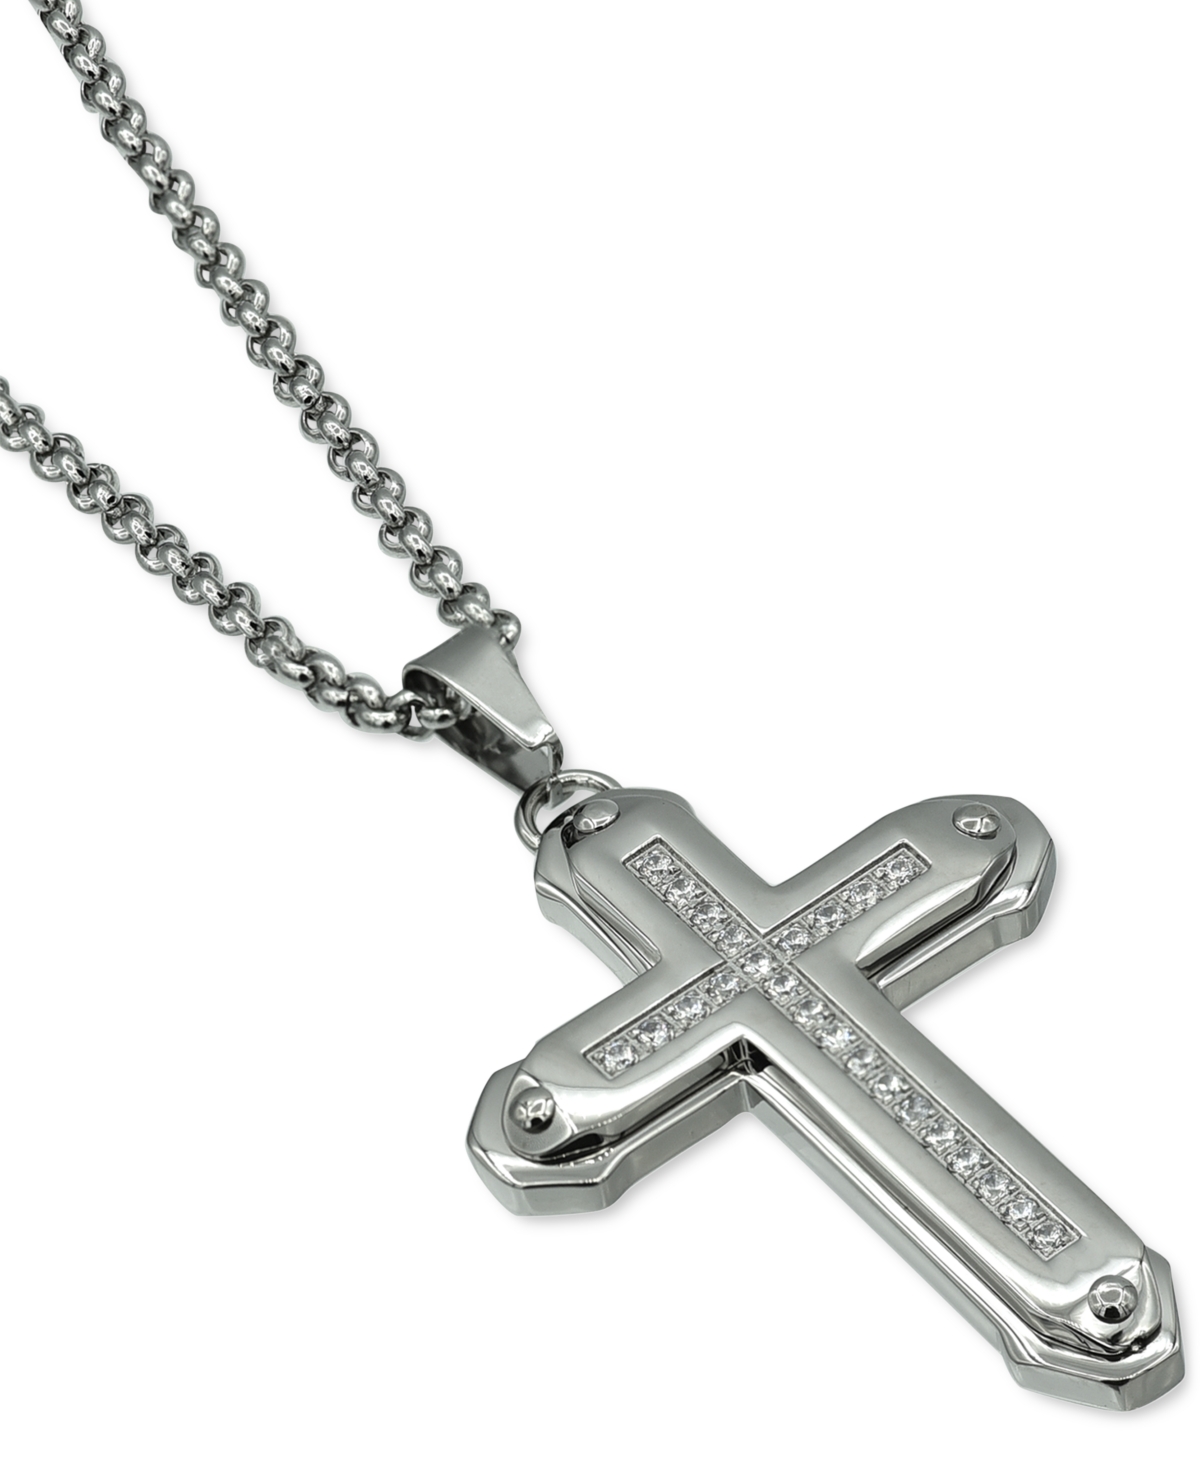 Men's Cubic Zirconia Cross 24" Pendant Necklace in Stainless Steel - Stainless Steel